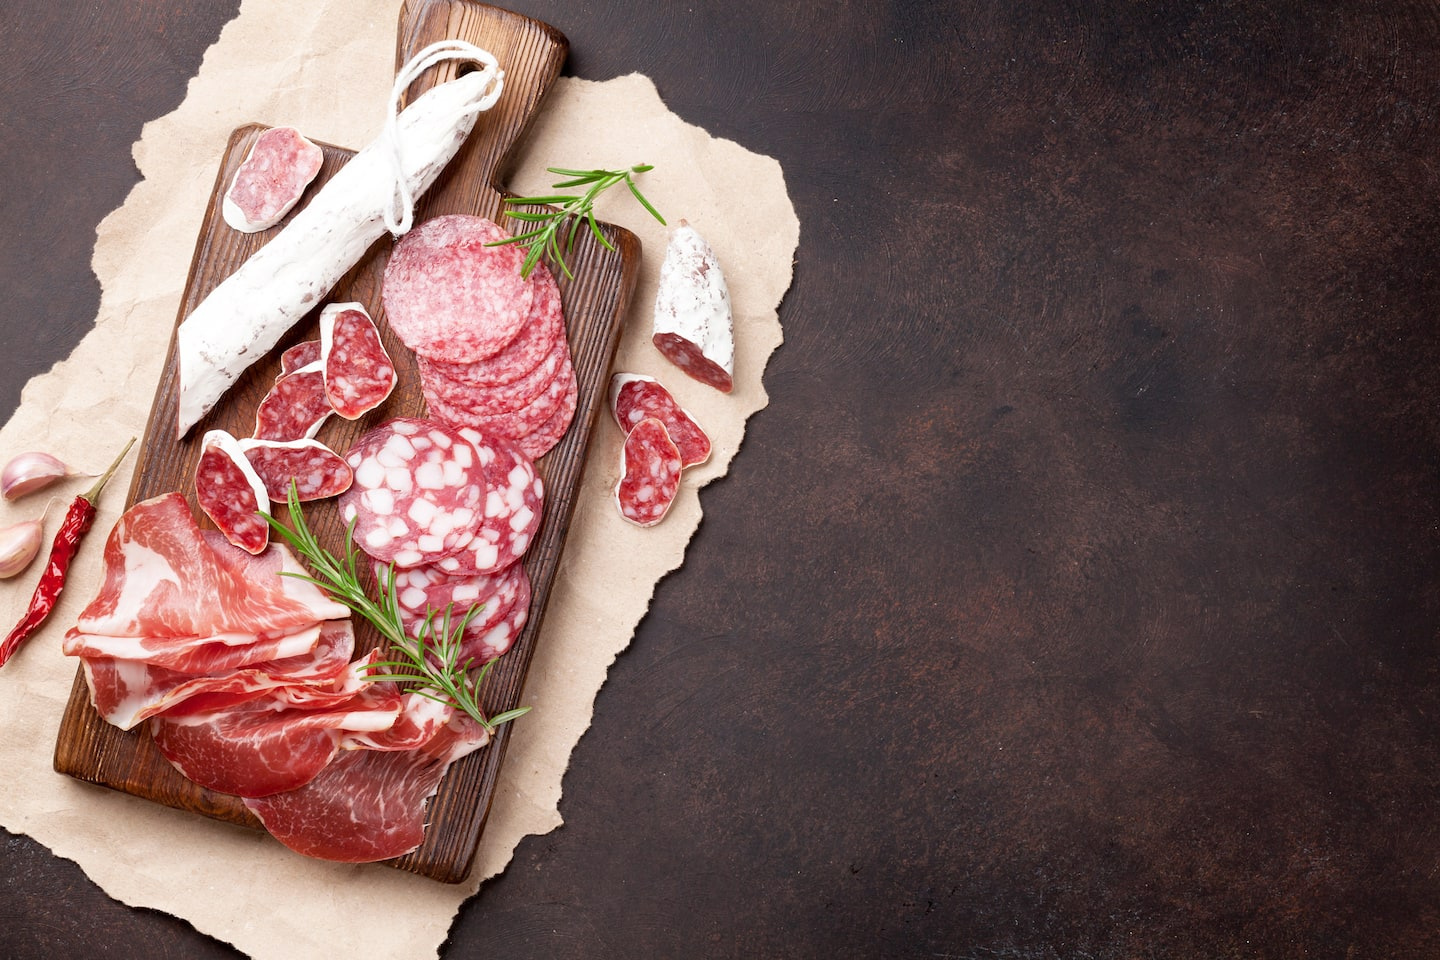 Should you ban certain deli meats?